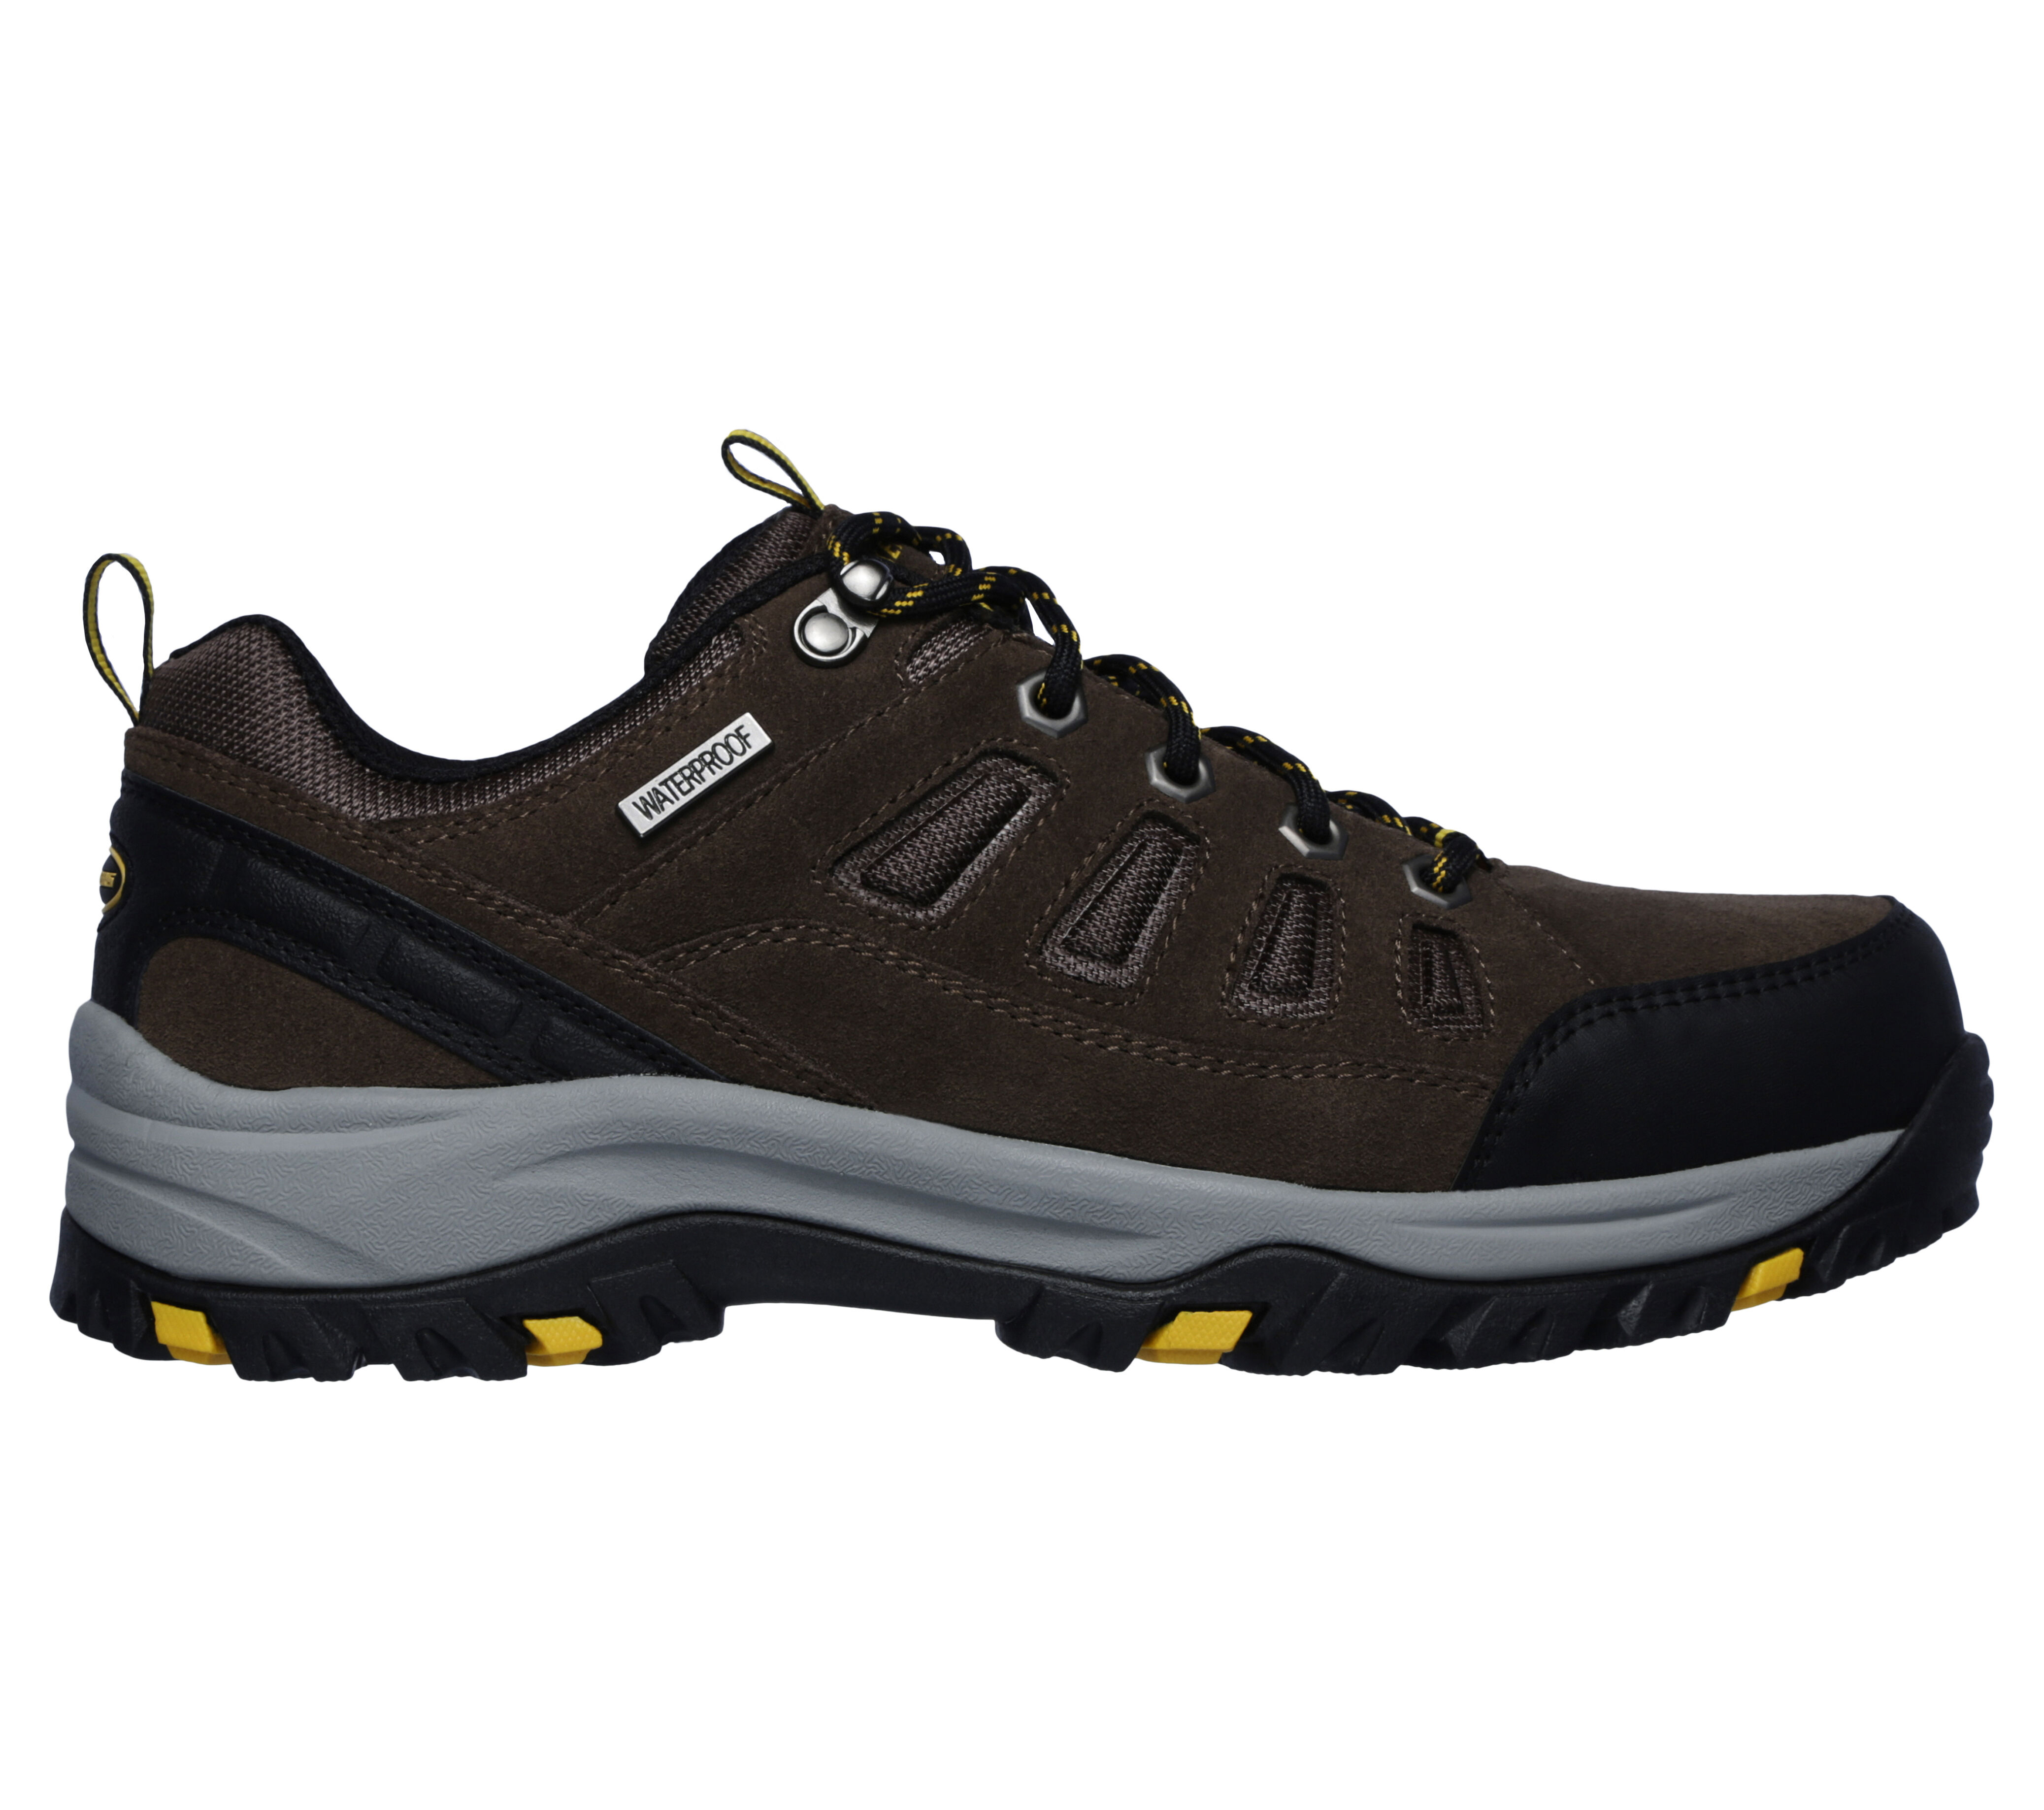 skechers men's diameter marsh hiking shoes